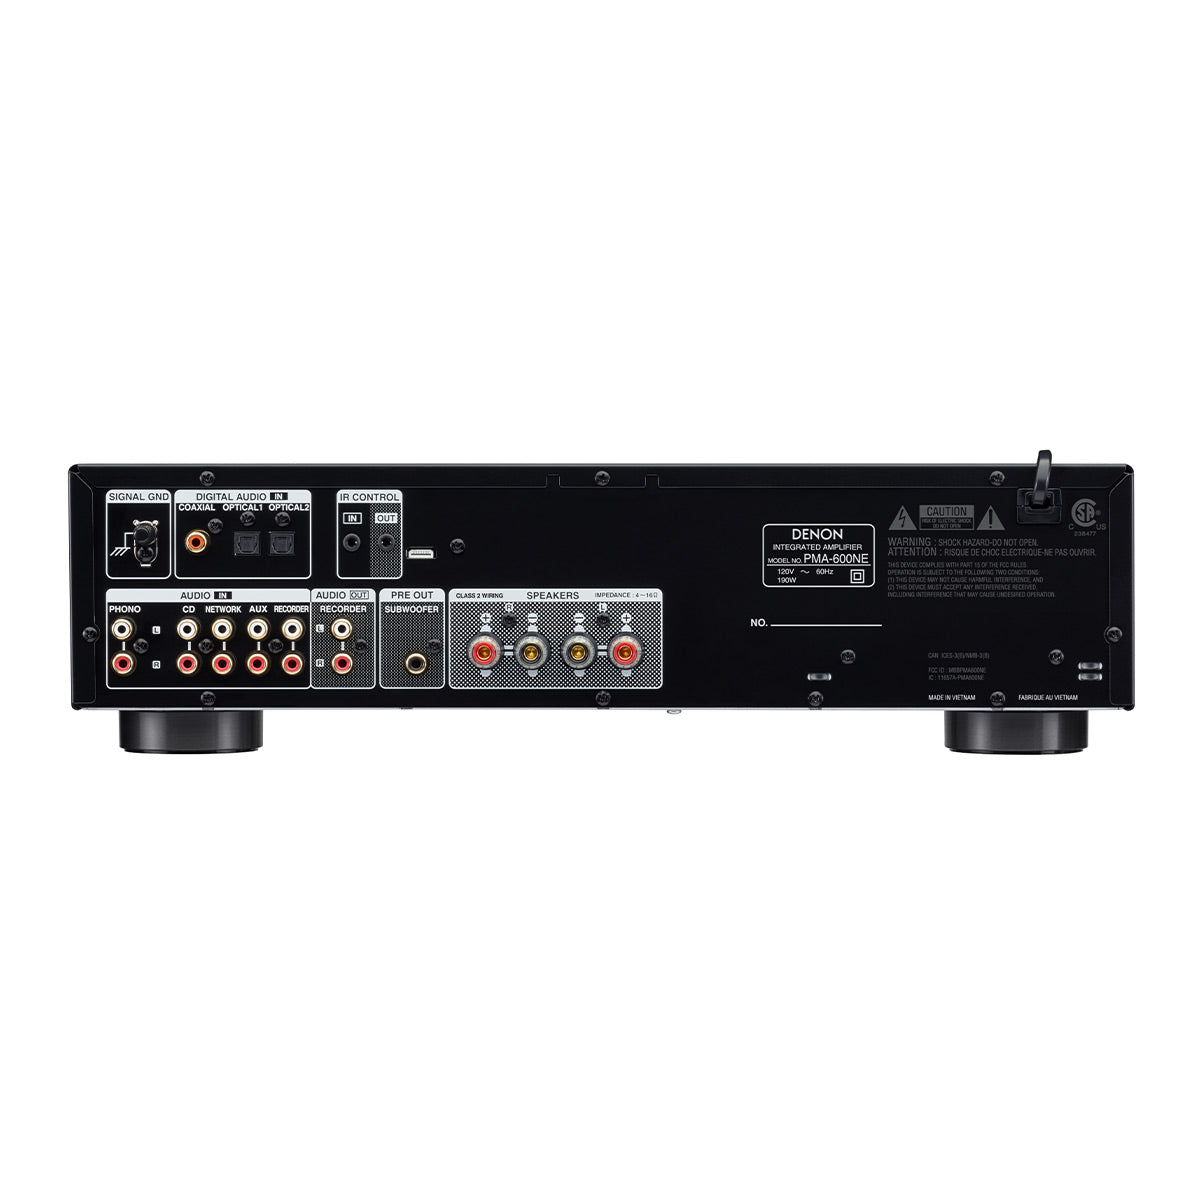 Denon PMA-600NE 2 Channel 70W Integrated Amplifier with Bluetooth